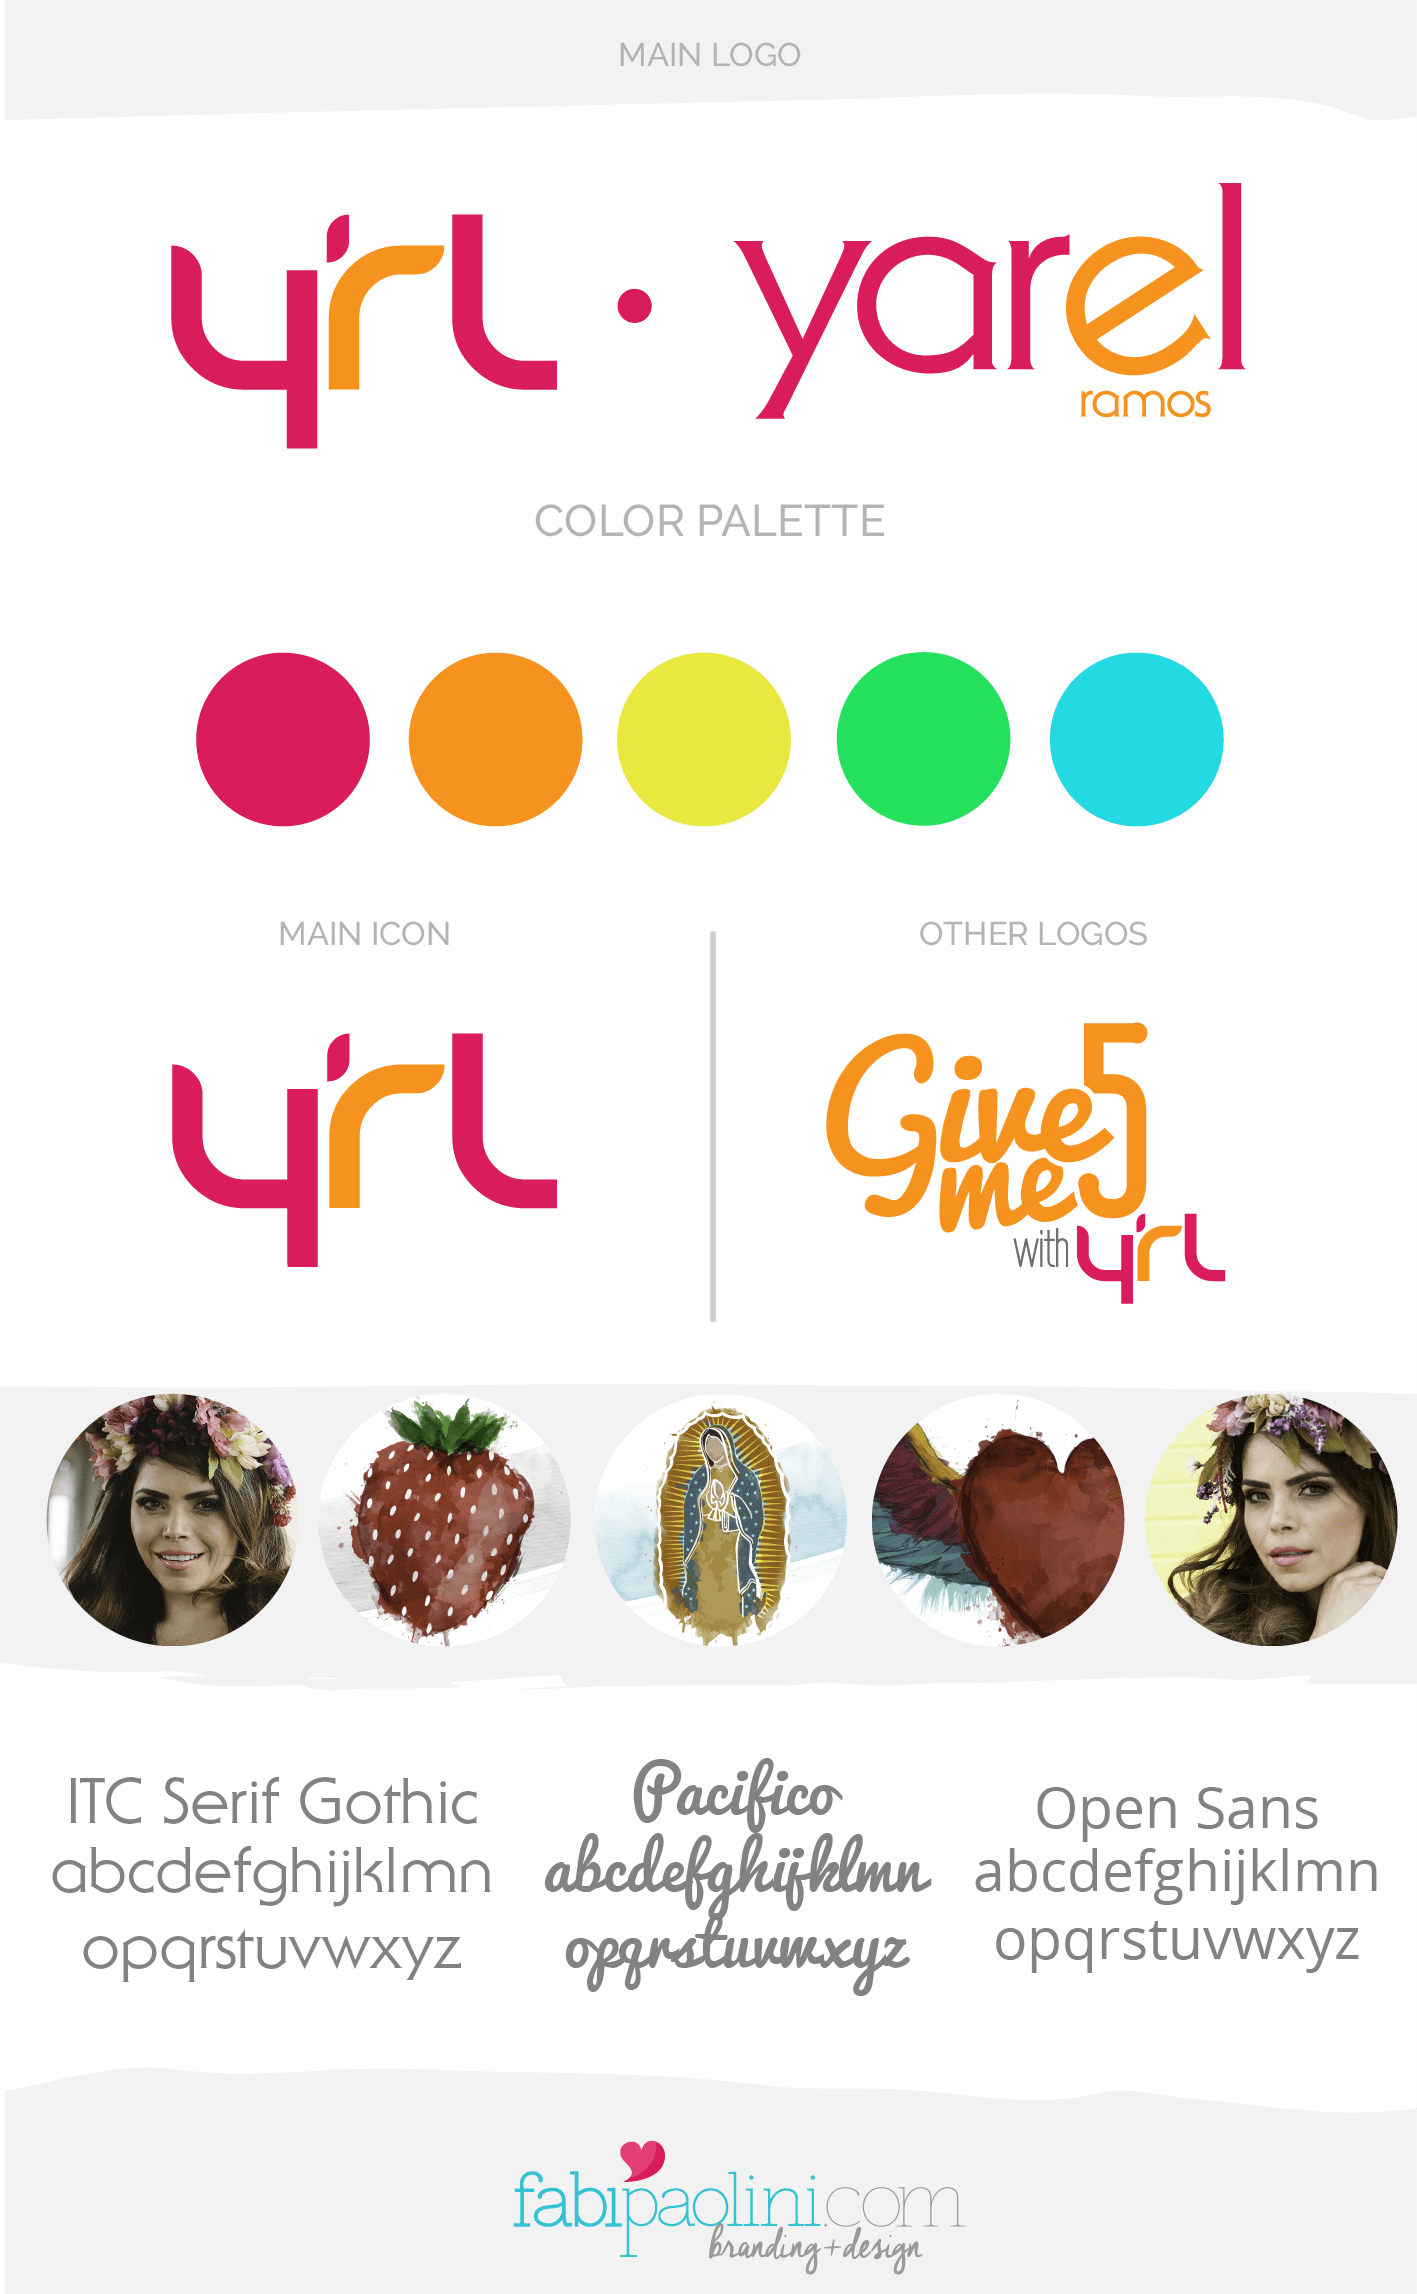 Yarel Ramos Brand Board Branding + Logo Design , colors, fonts, icons Fabi Paolini